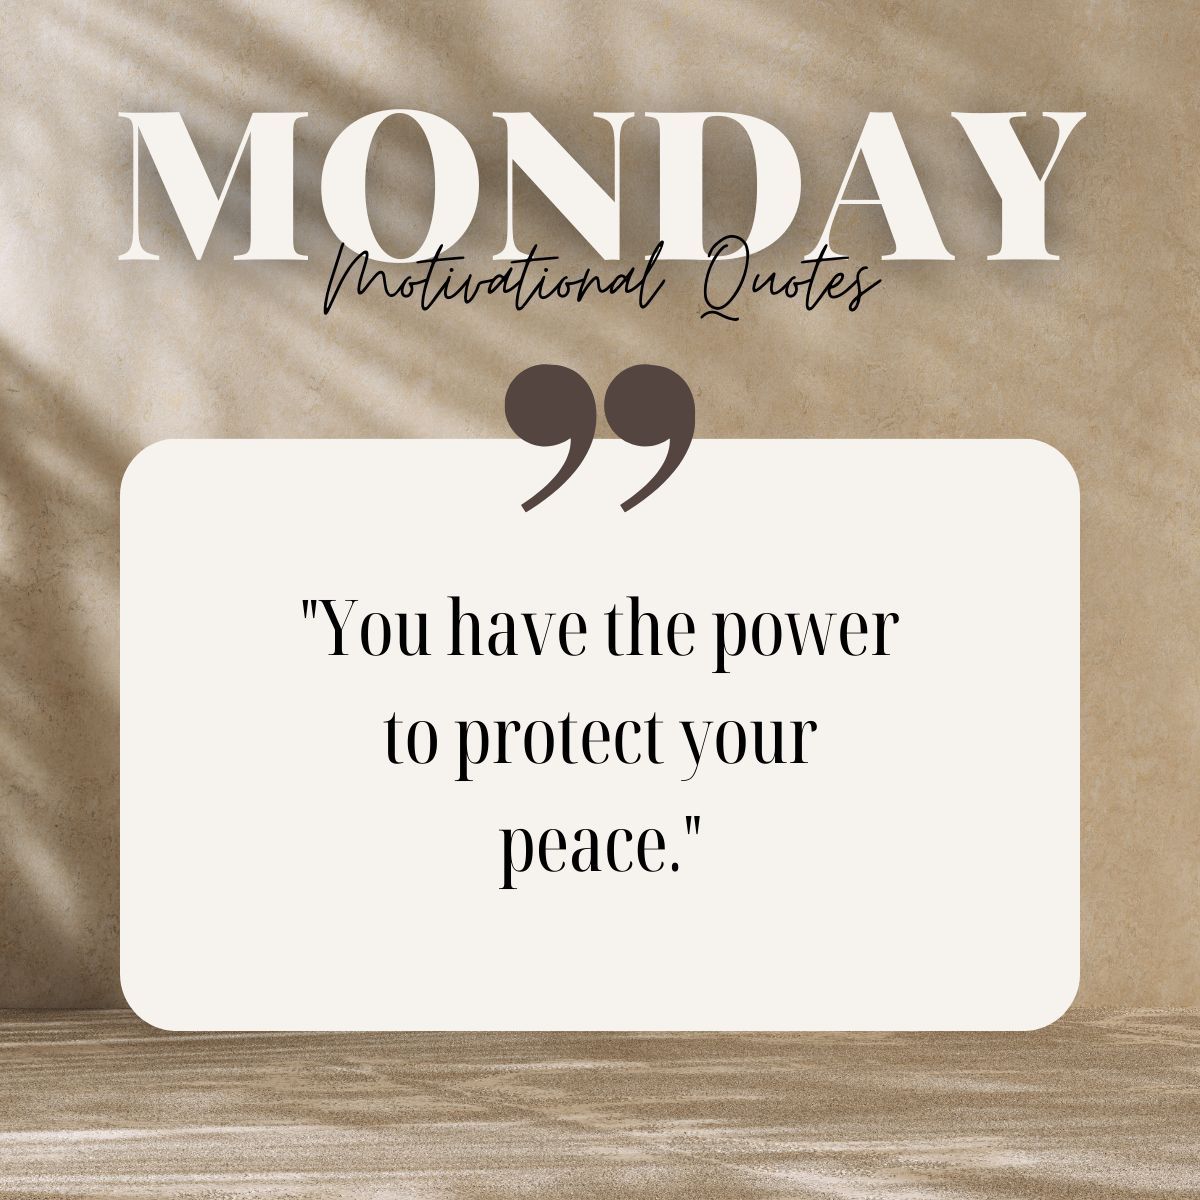 Self Care on a Monday.

#mondayvibes #youcontrolyou #peaceandharmony #financialfreedom